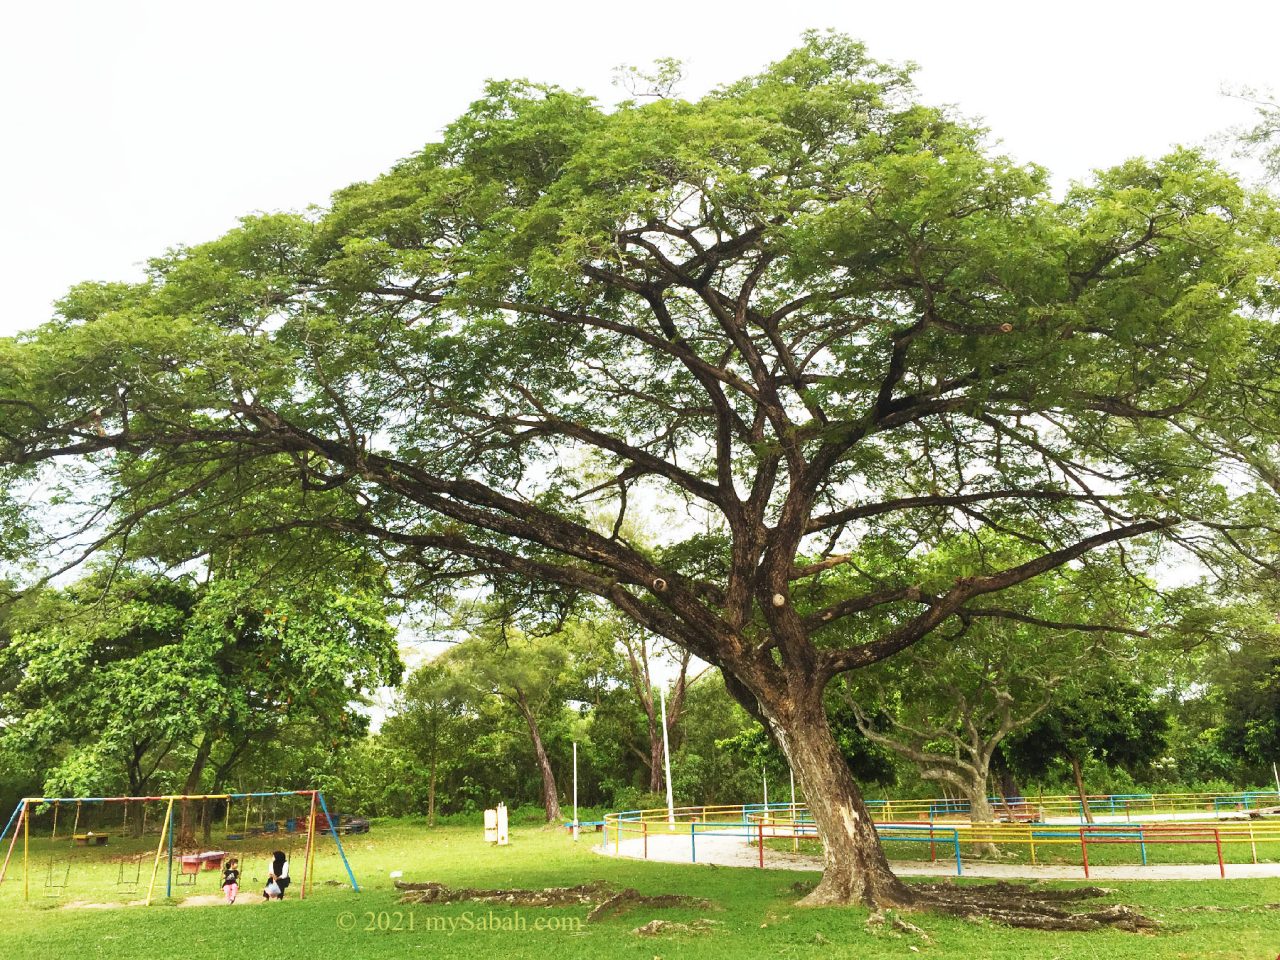 An old rain tree at Tanjung Aru Second Beach